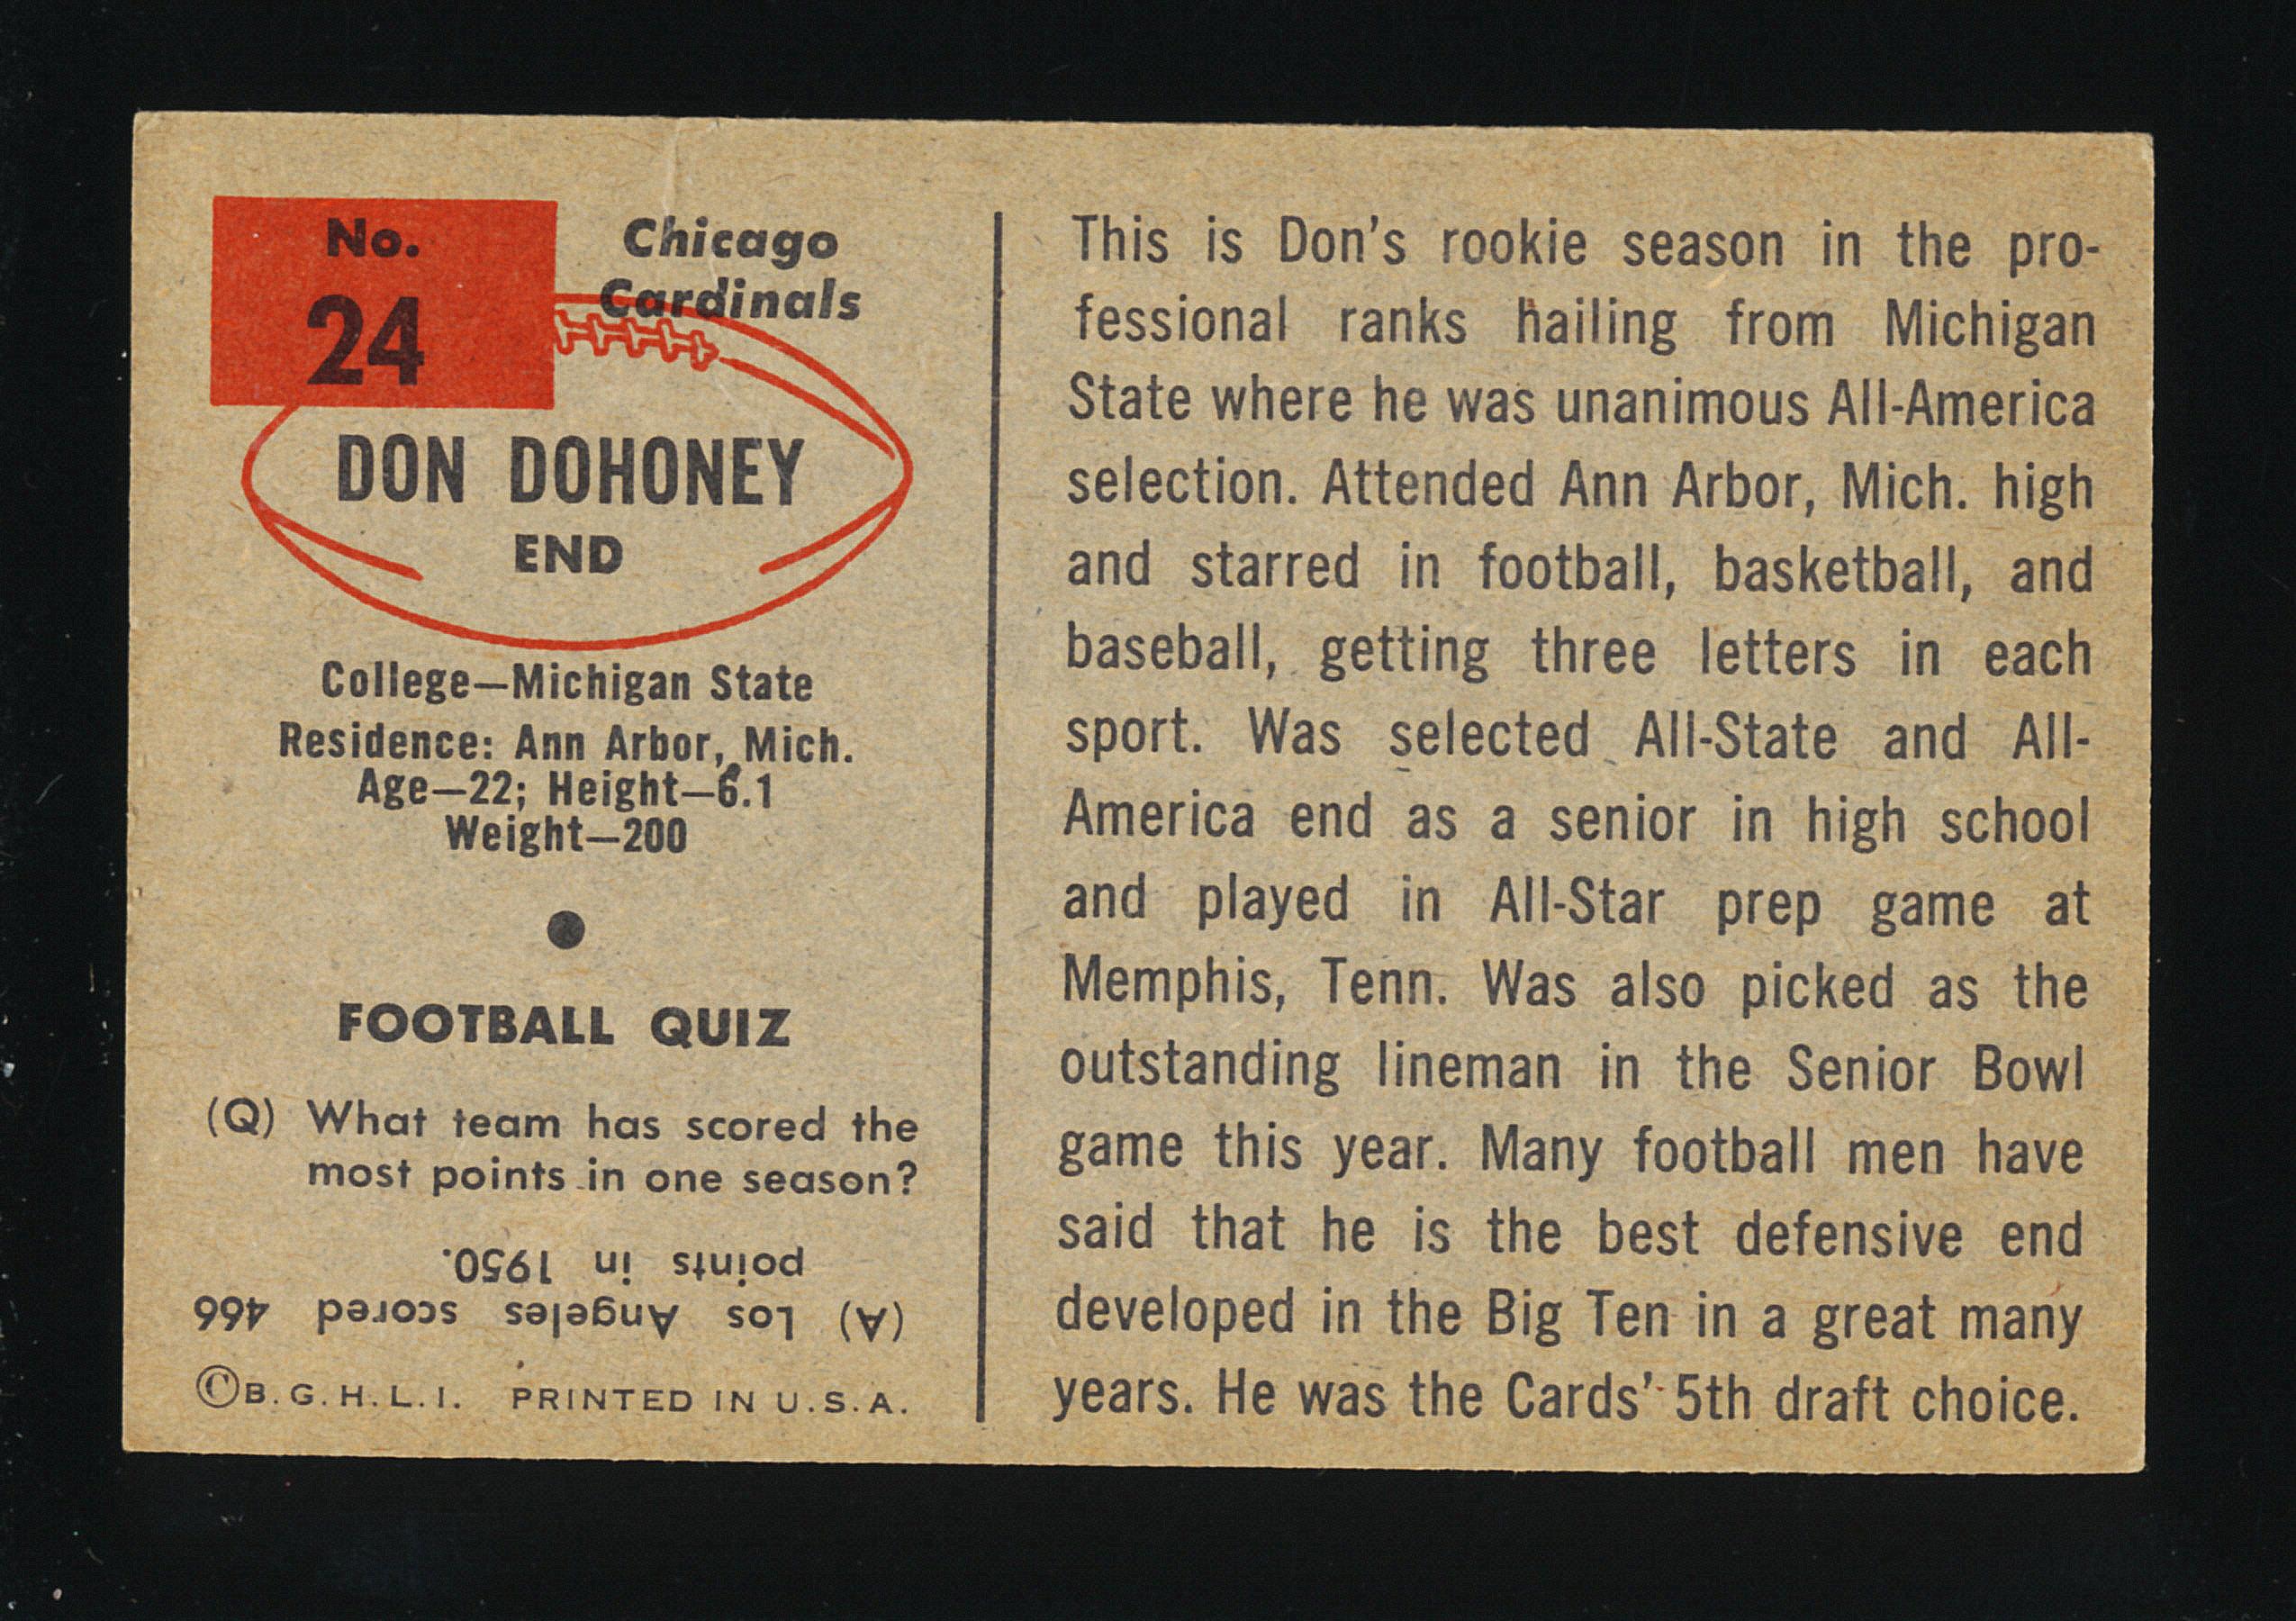 1954 Bowman Football Card #24 Don Dohoney Chicago Cardinals